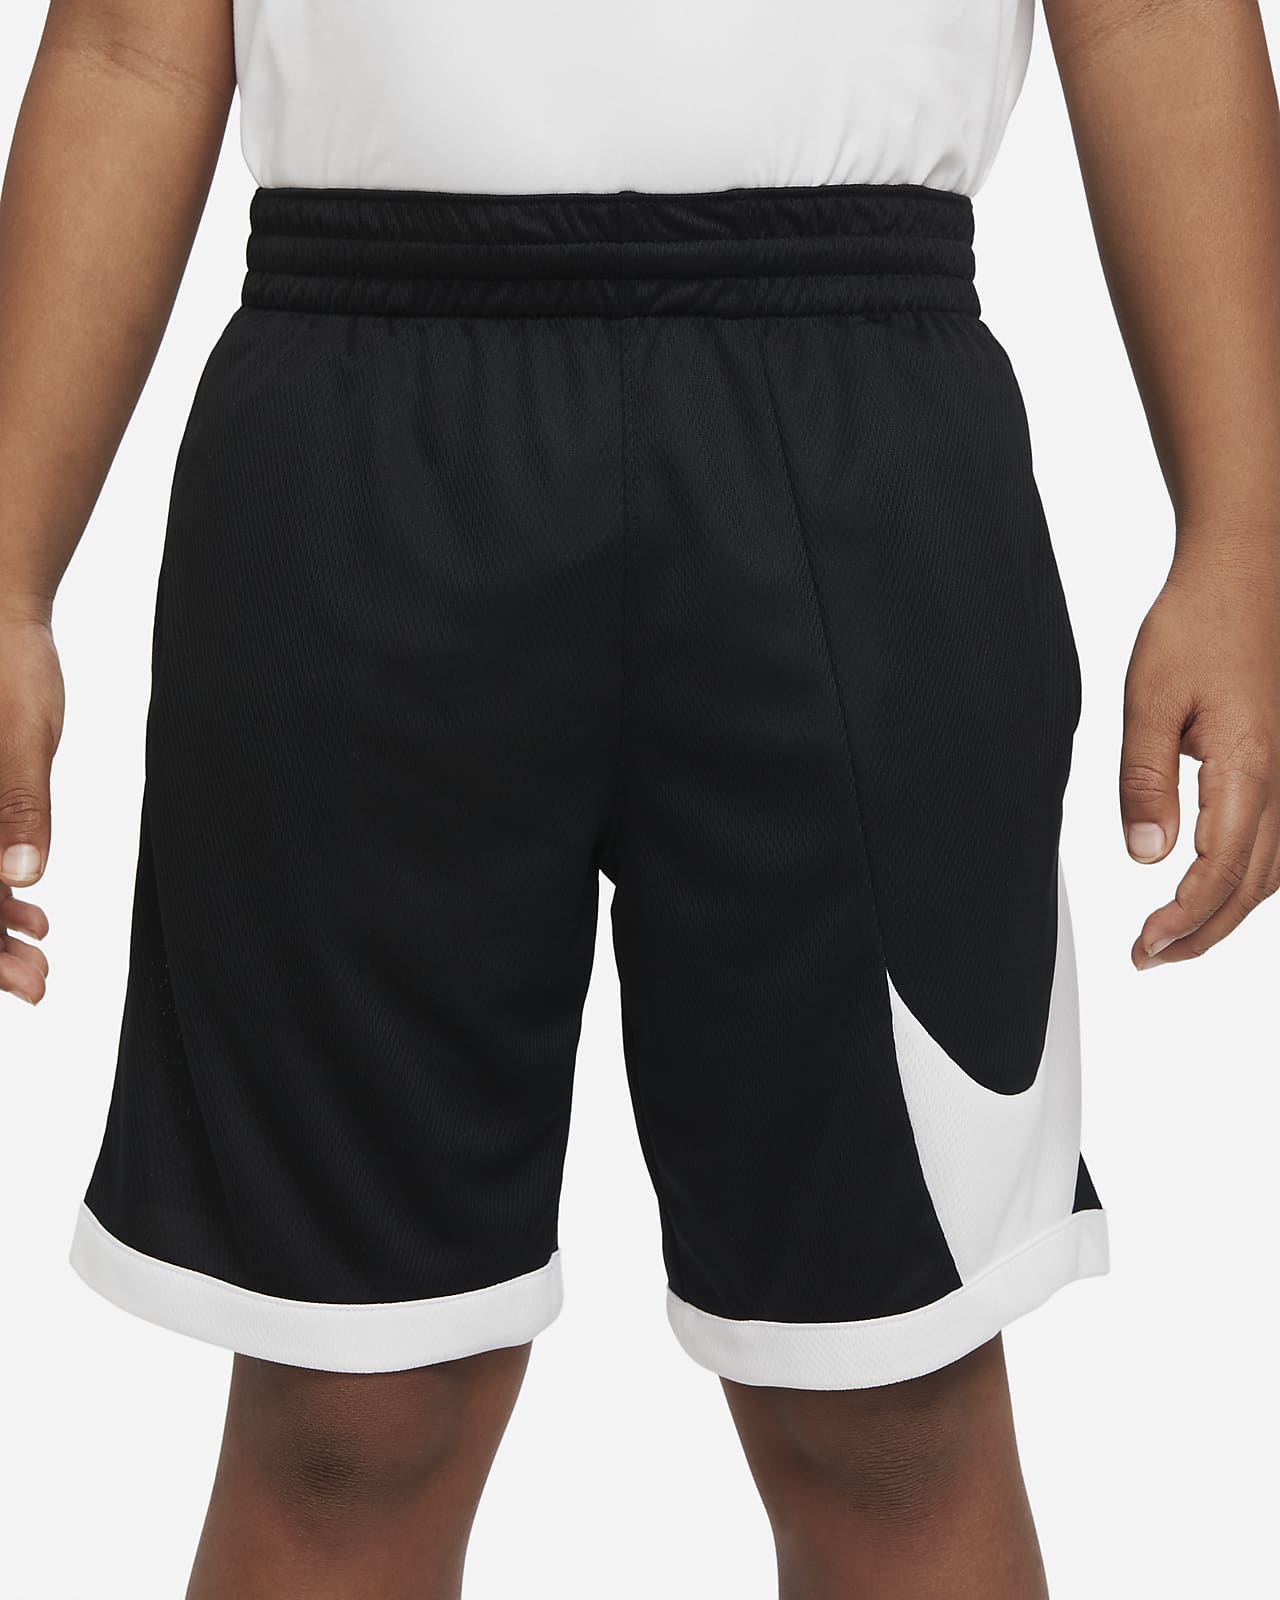 Shorts de básquetbol para niños talla grande Nike Dri-FIT